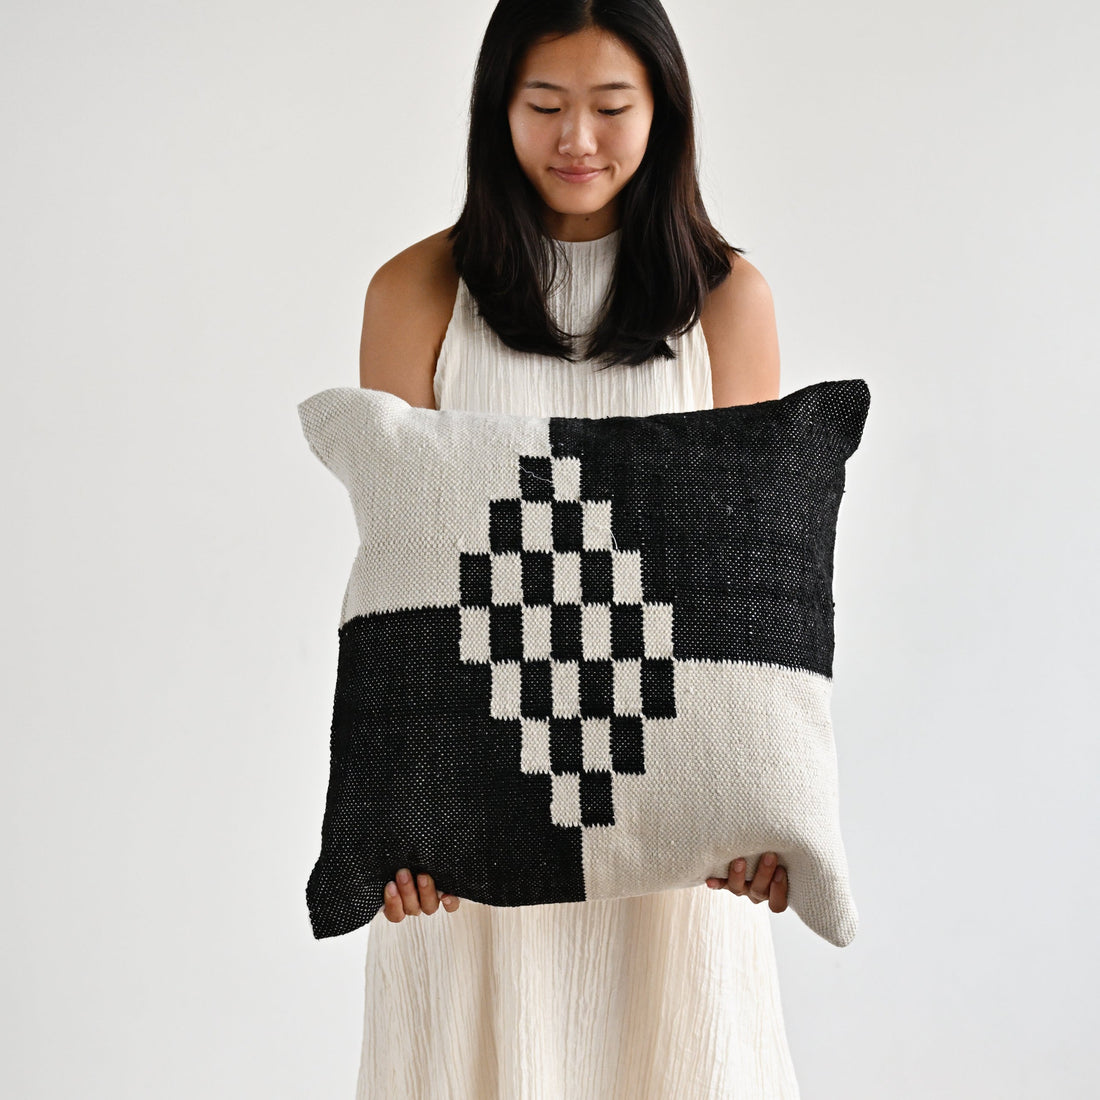 Checkered Indoor Outdoor Handwoven Cushion